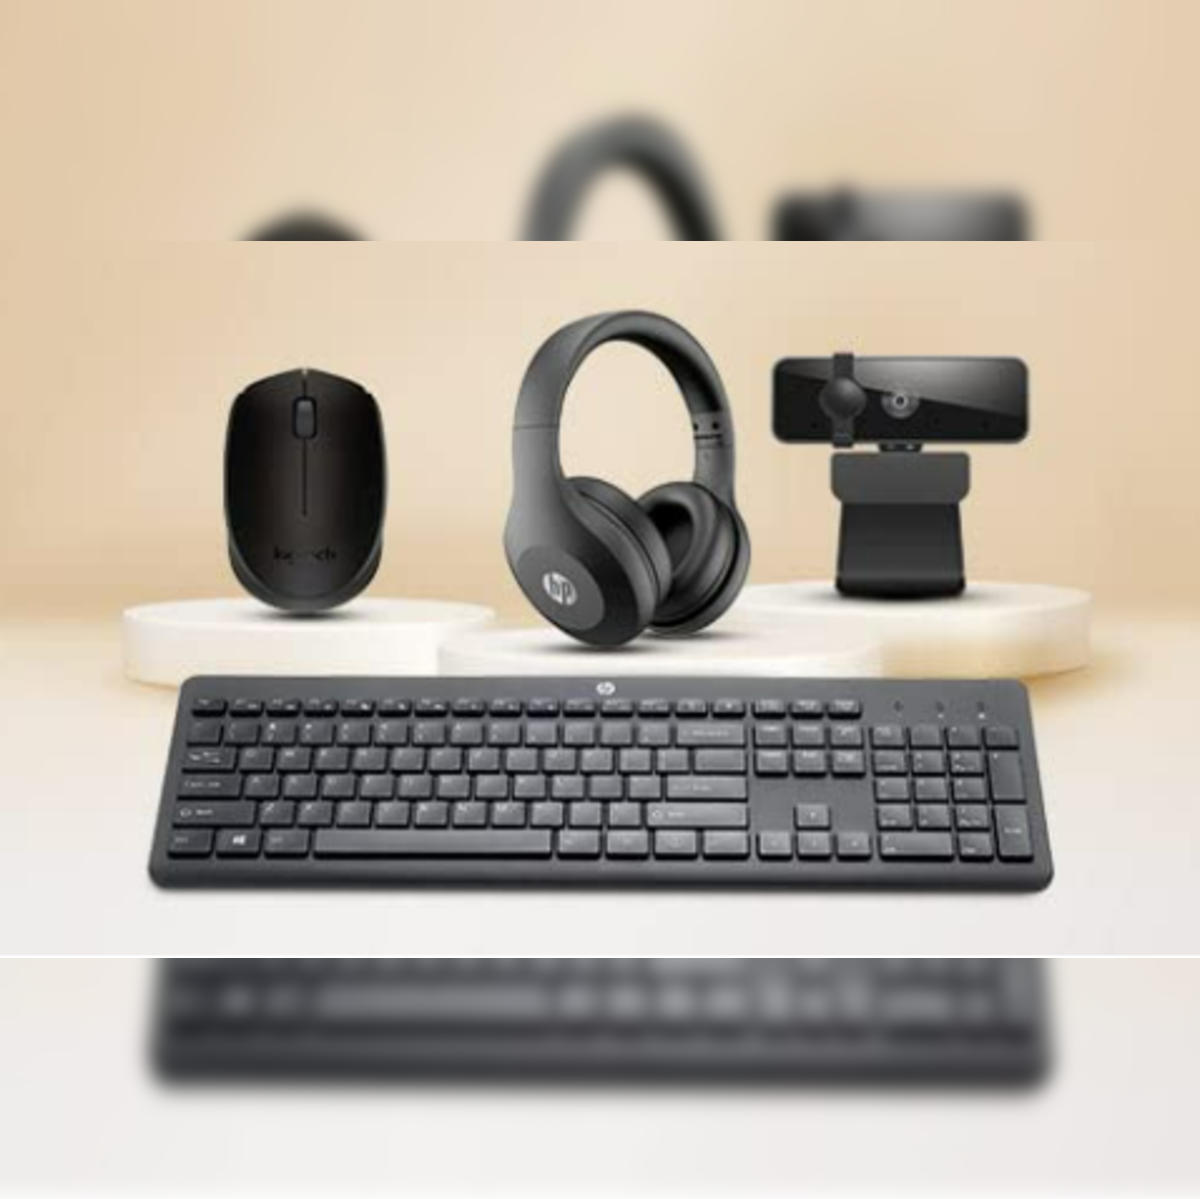 Sale 2023: Explore lowest price on computer accessories